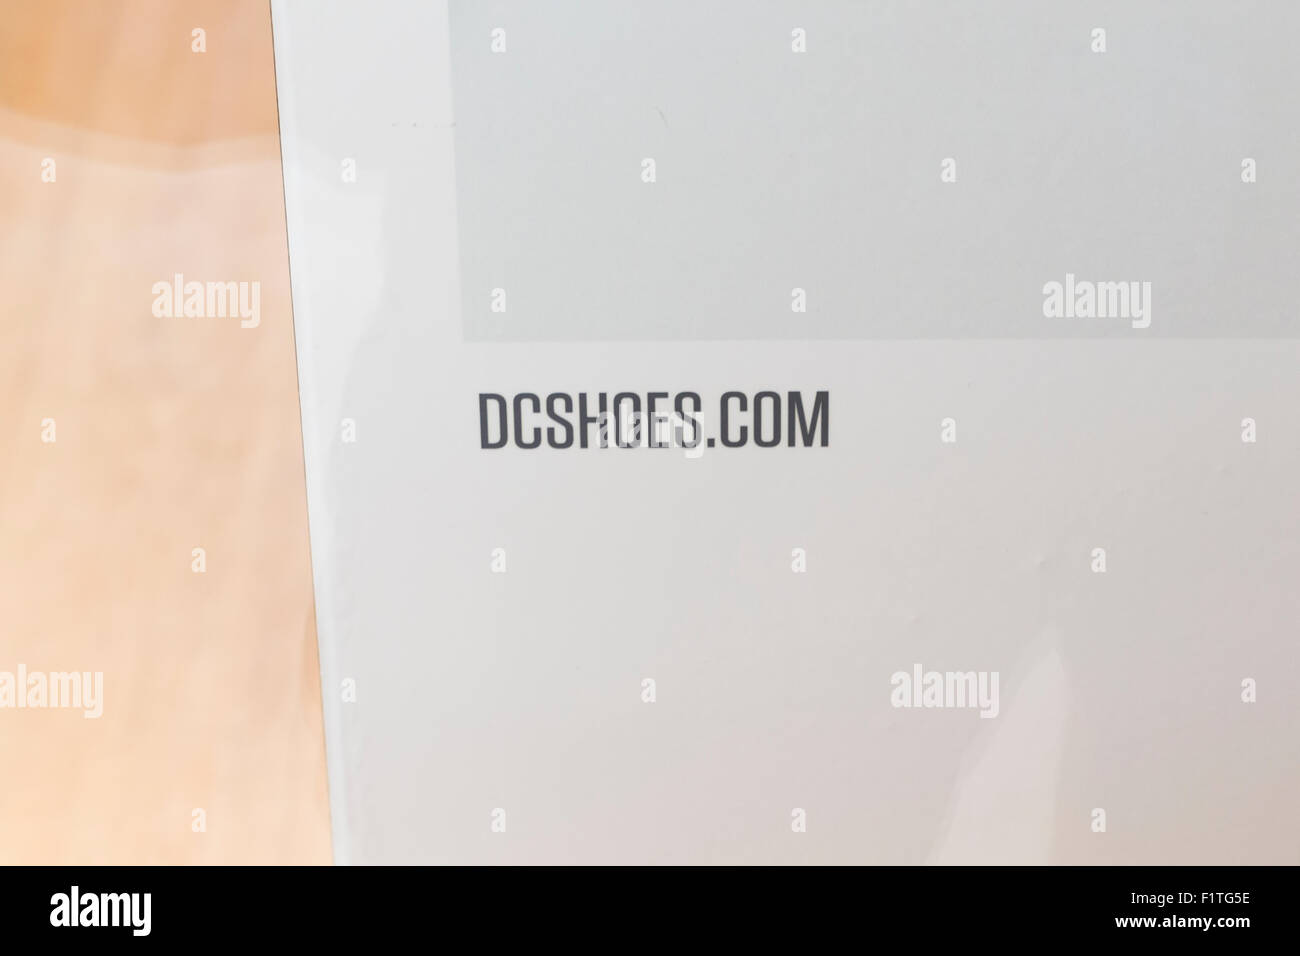 DC shoes logo Stock Photo